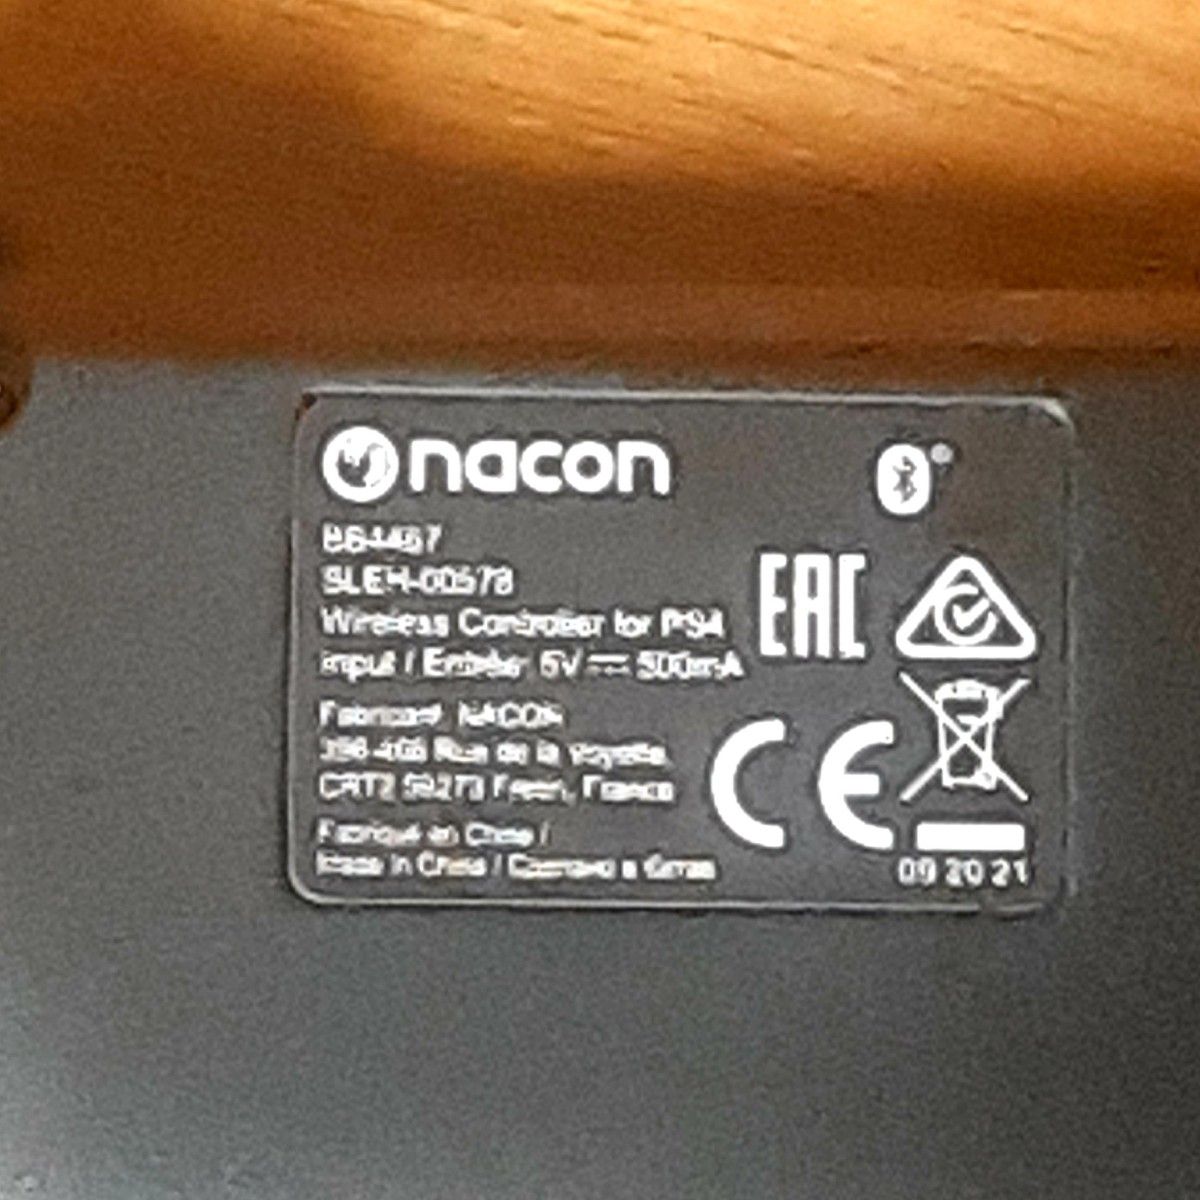 Nacon プロコントローラー SLEH-00578 PS4/ PS3/PC